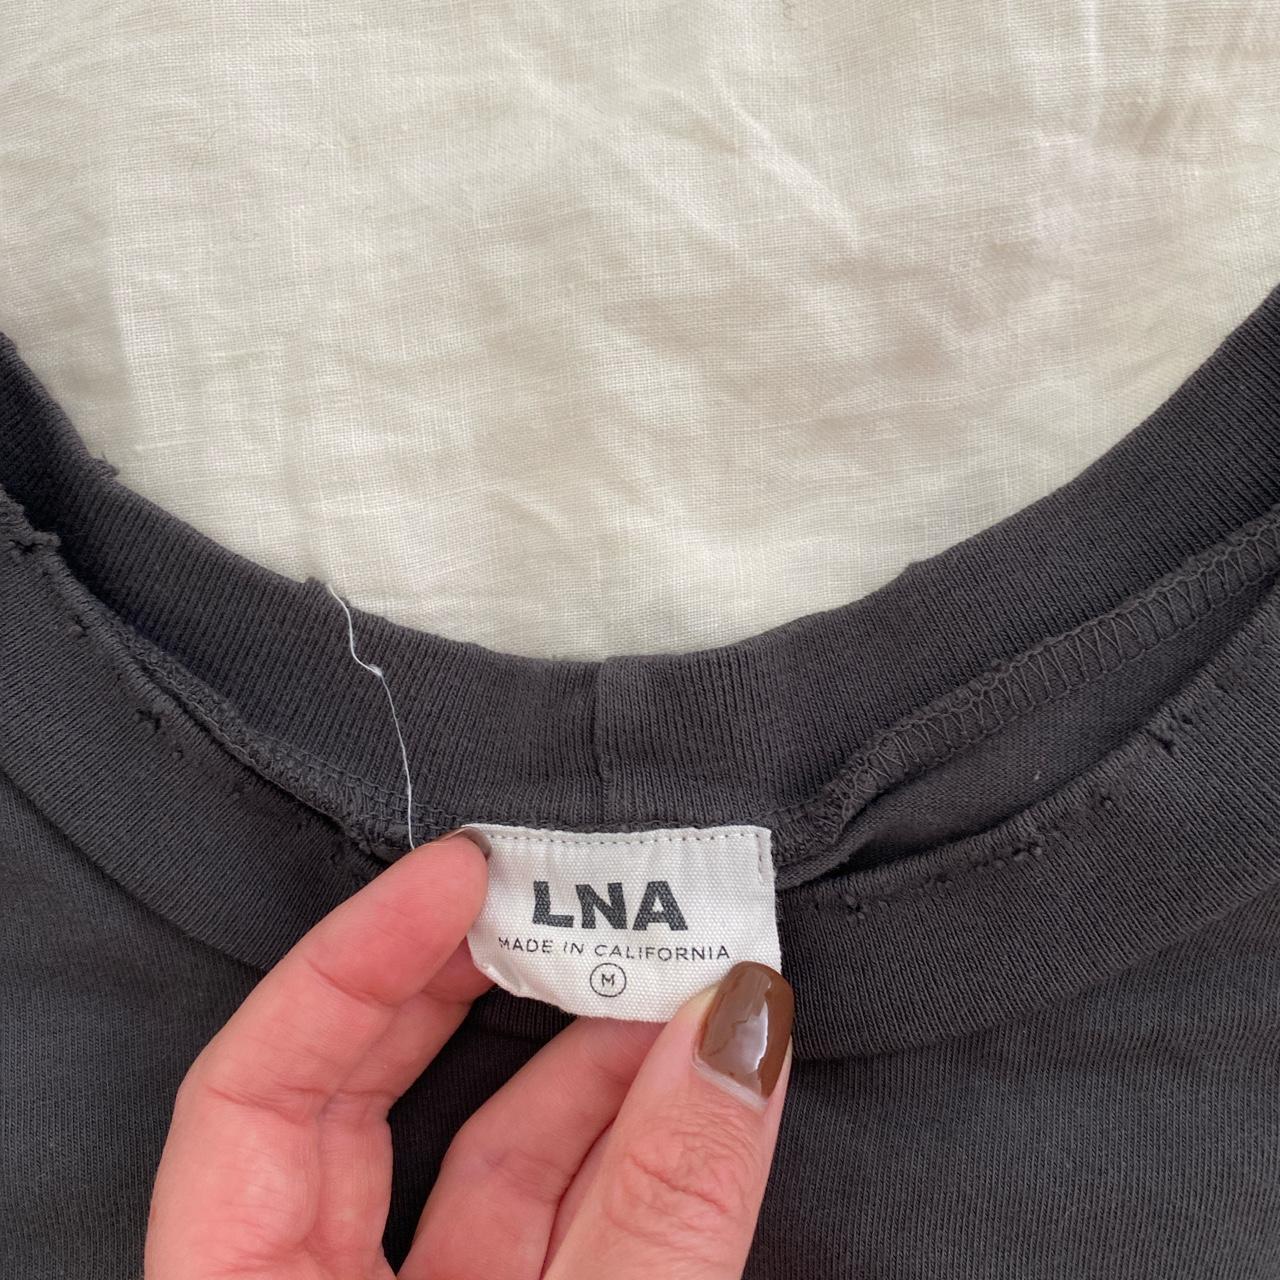 Product Image 2 - LNA grey T-shirt dress. Barely